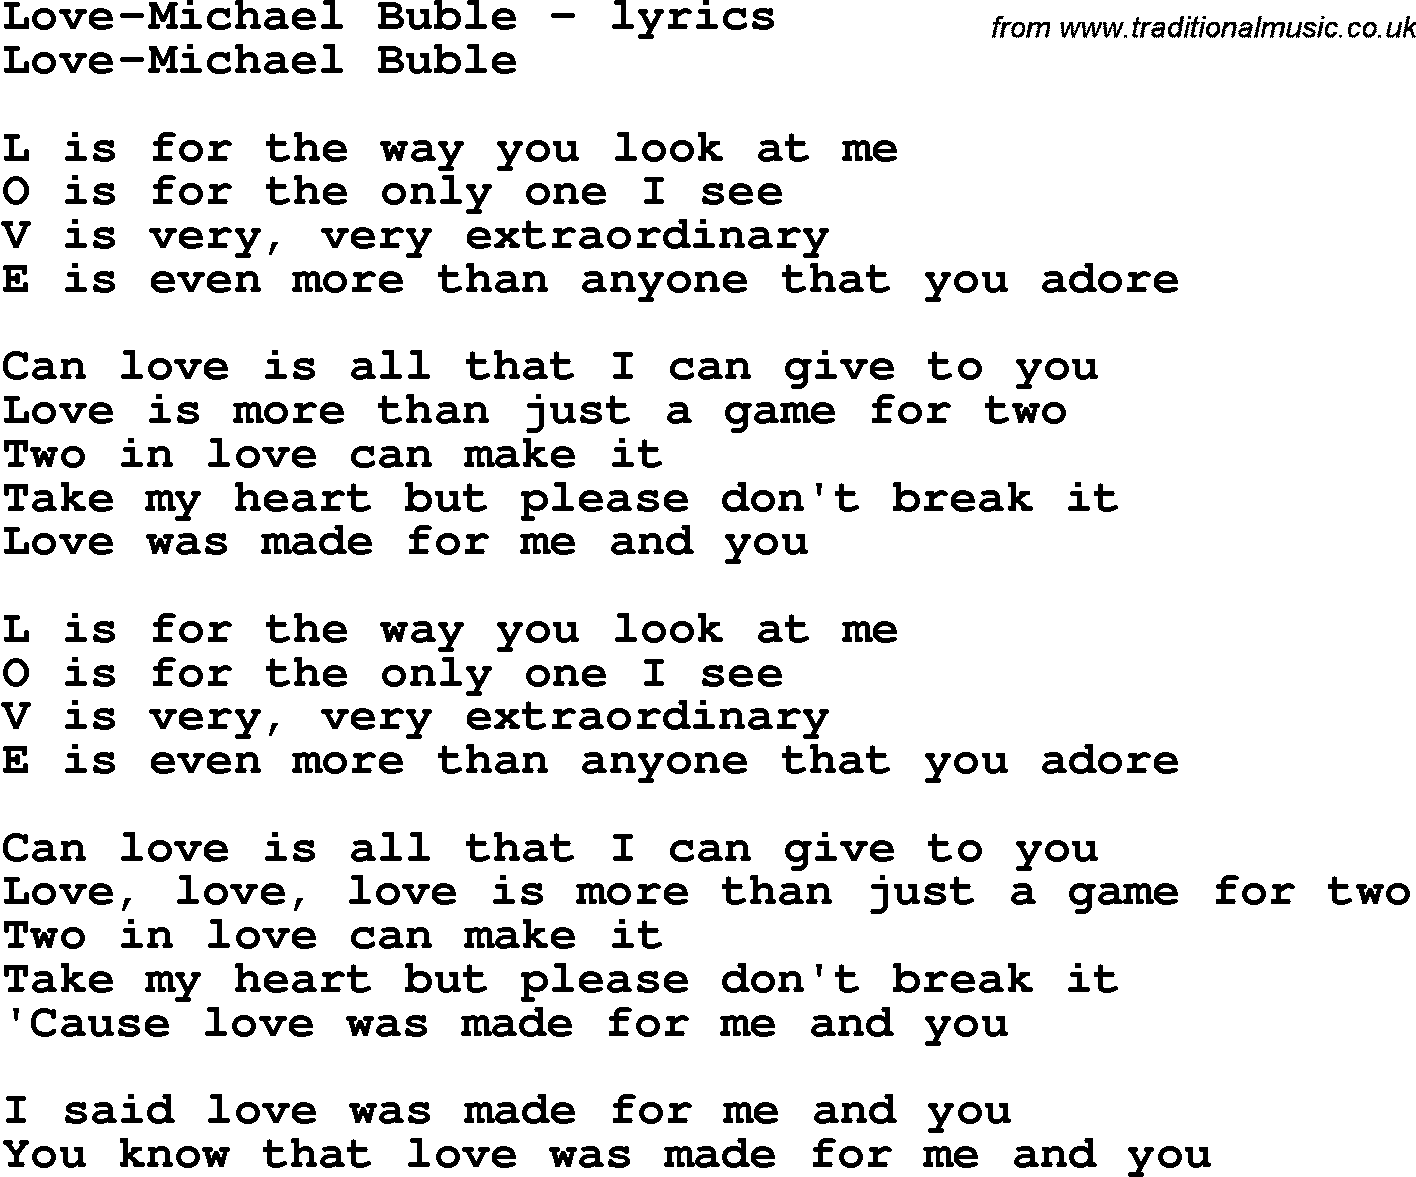 Love Song Lyrics for: Love-Michael Buble